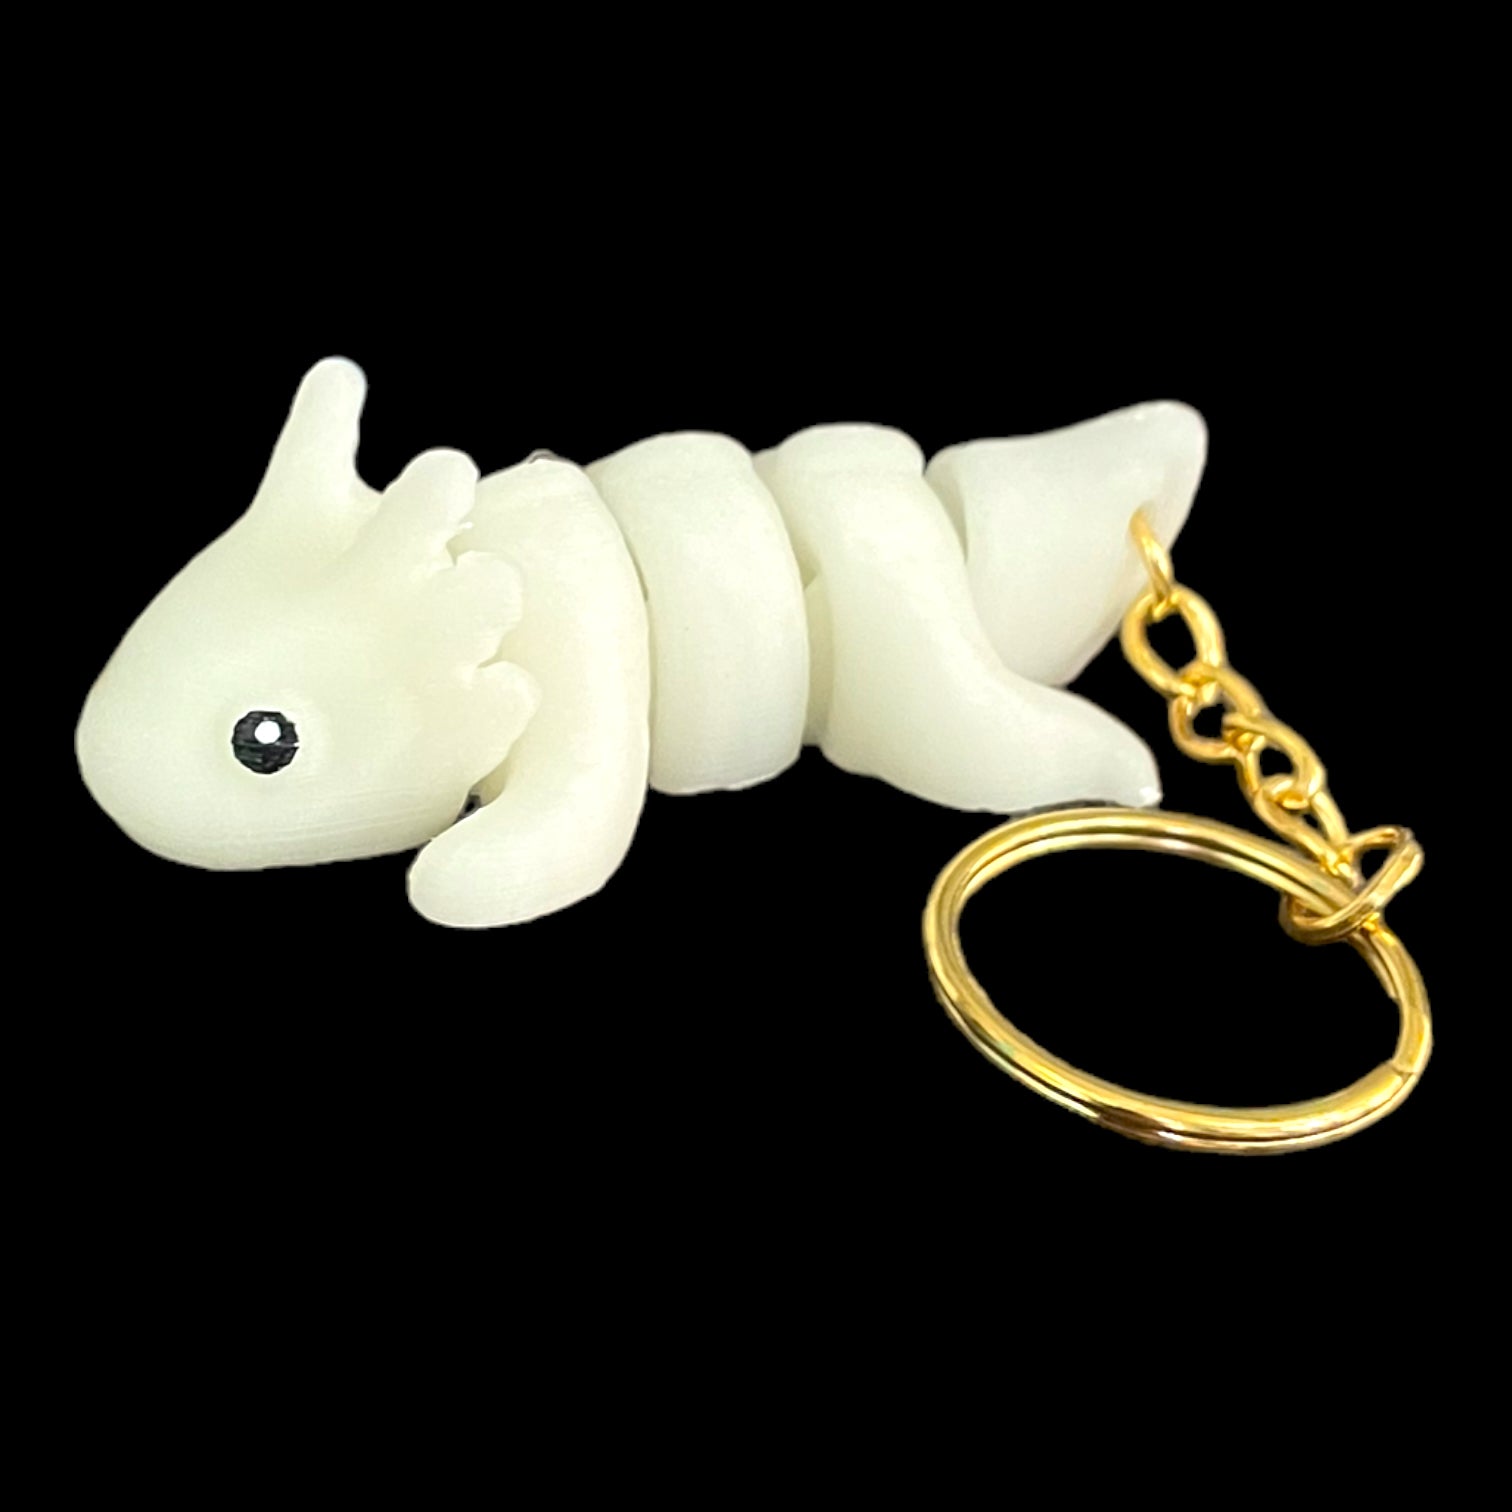 3D Printed Articulated Axolotl Keychain